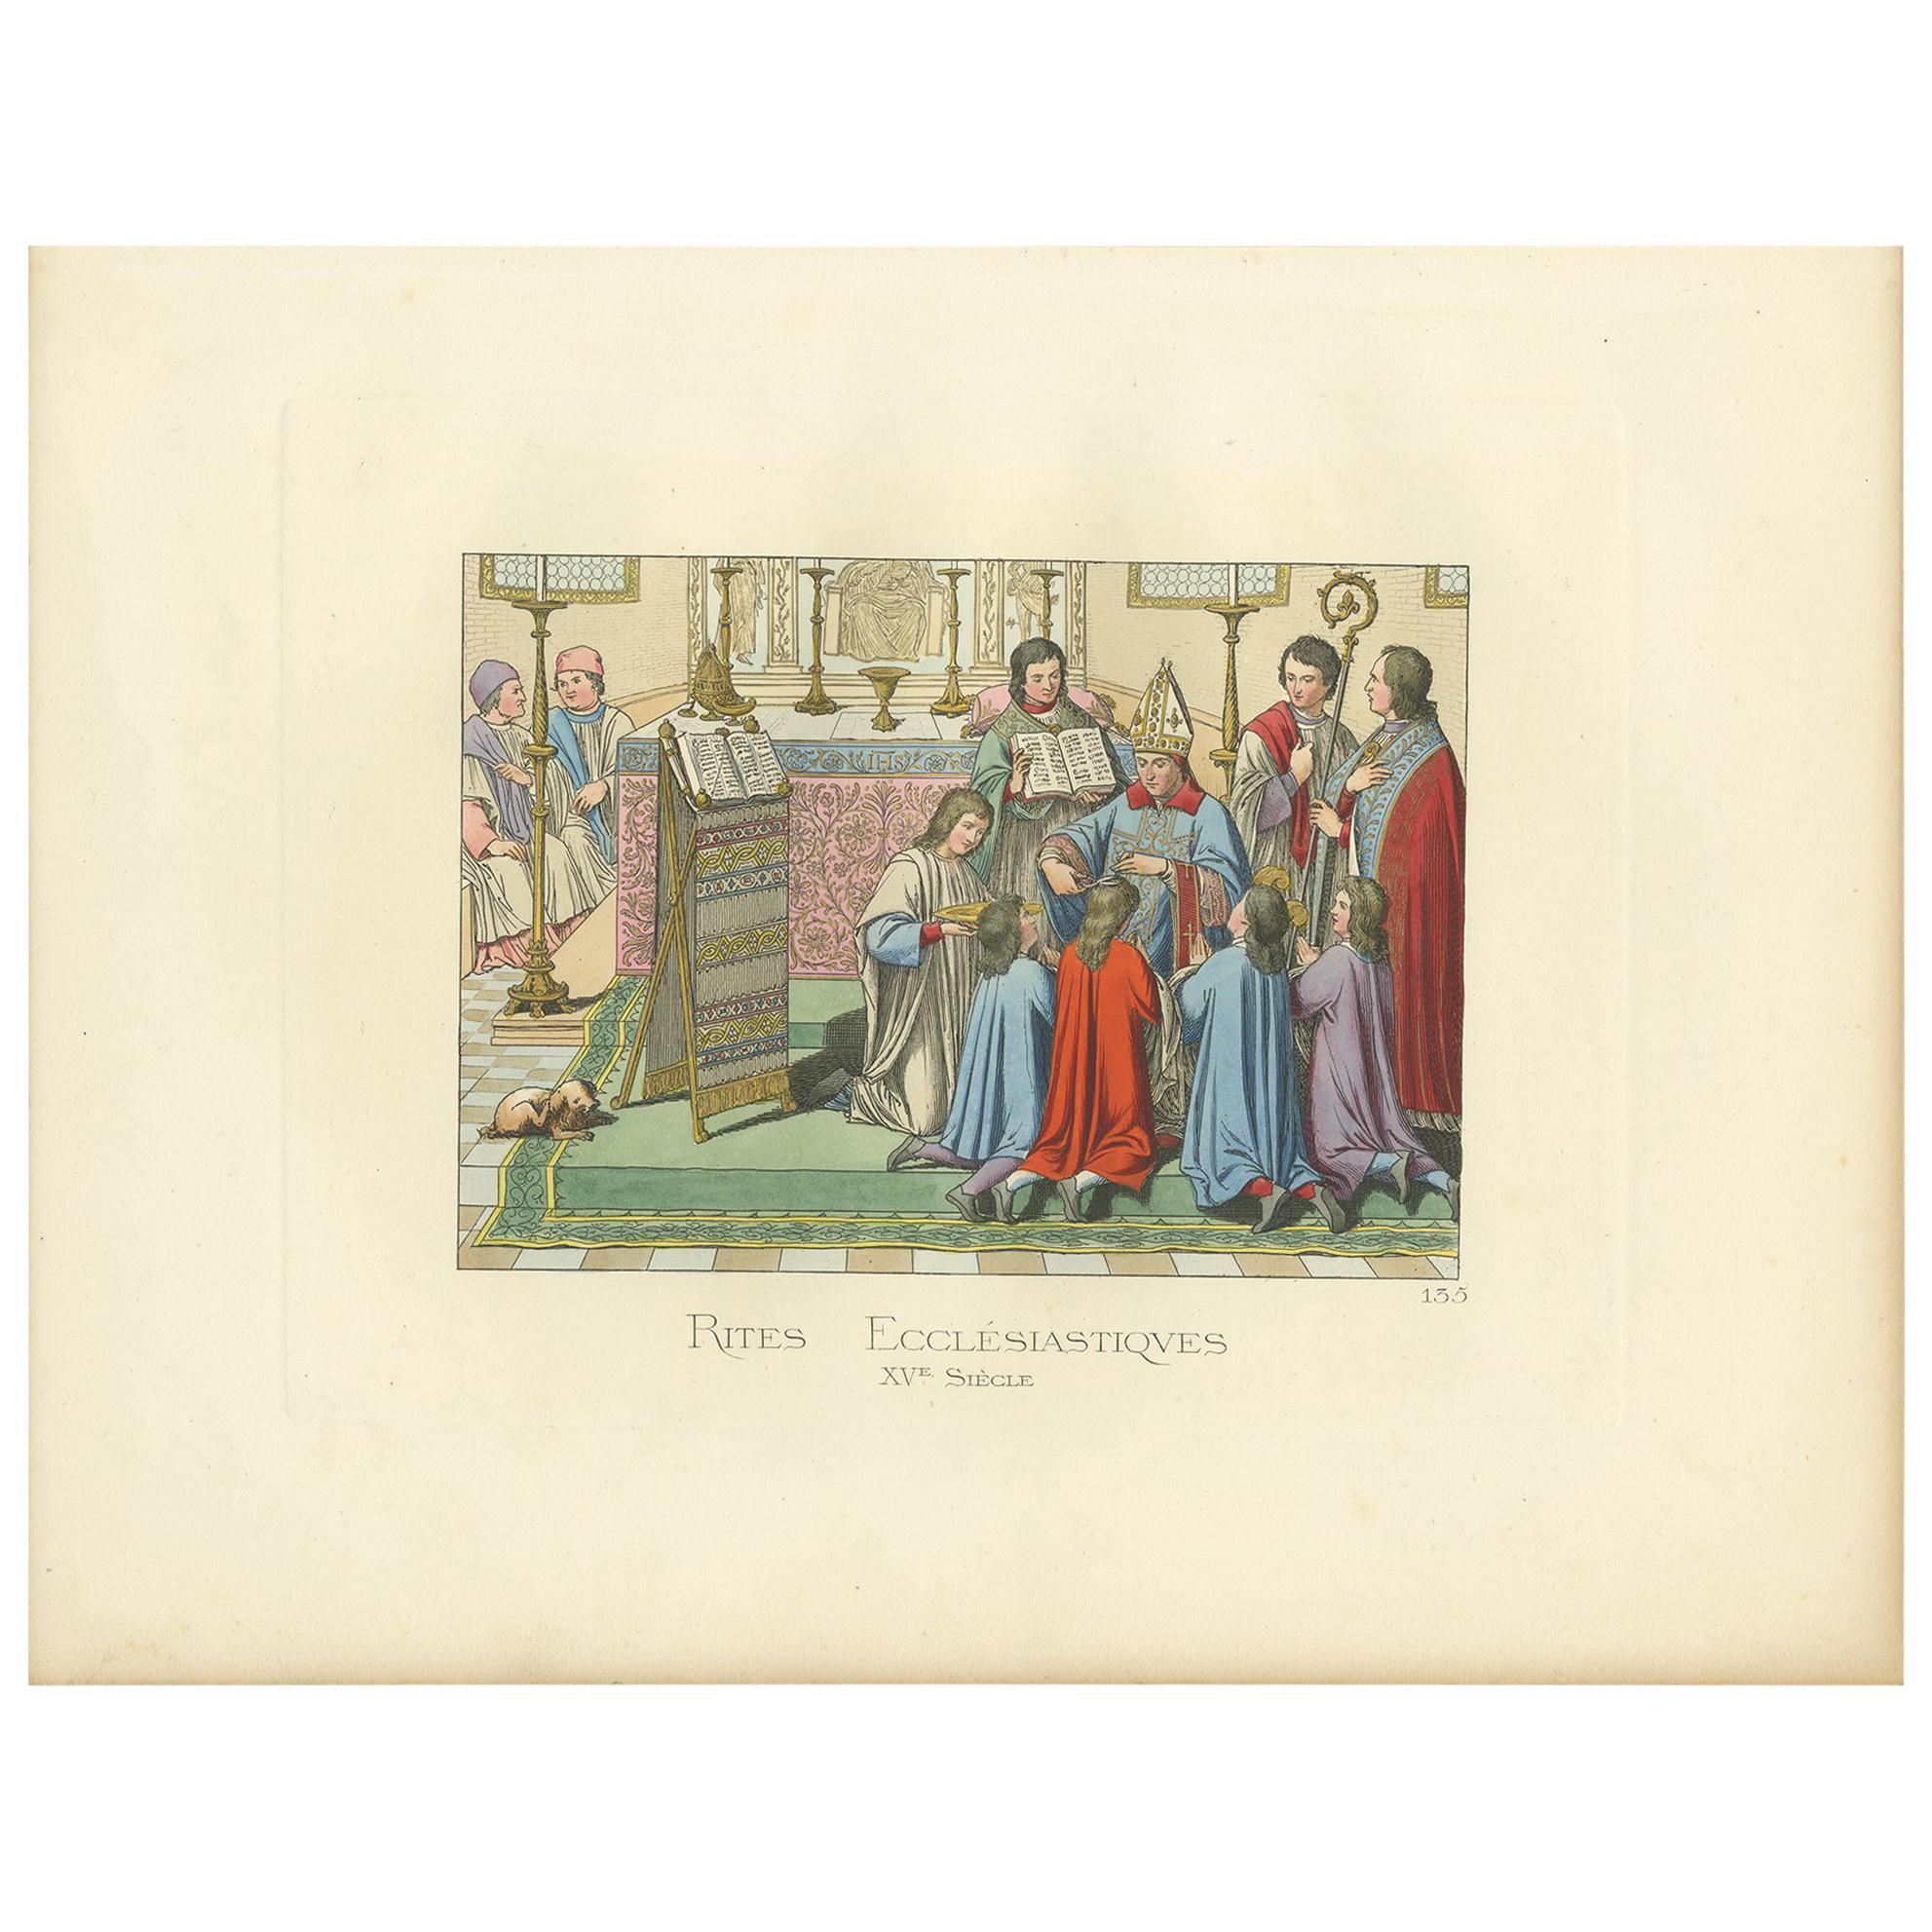 Antique Print of Ecclesiastical Rites, 15th Century, by Bonnard, 1860